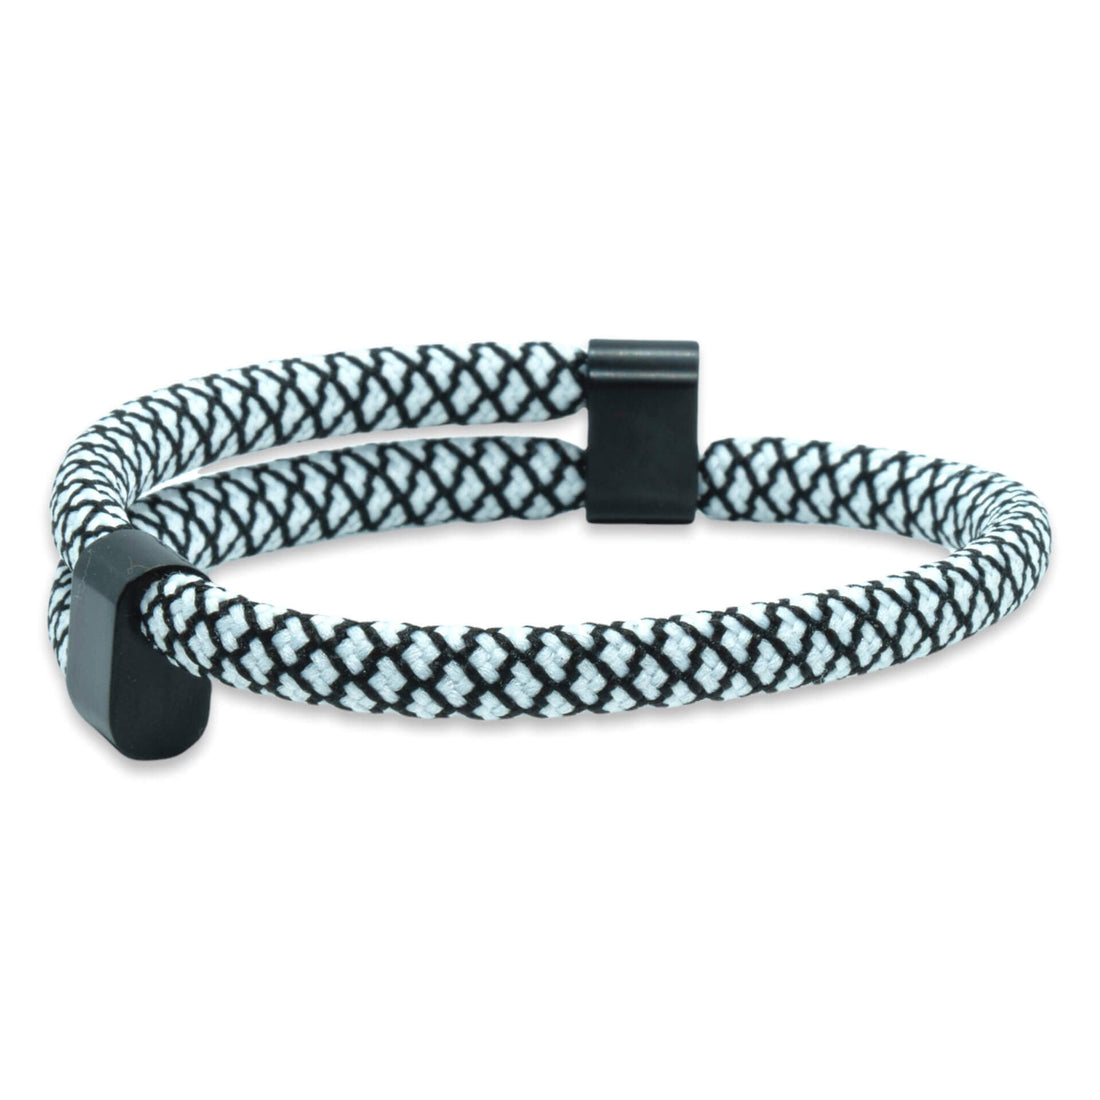 Adjustable rope - White / black